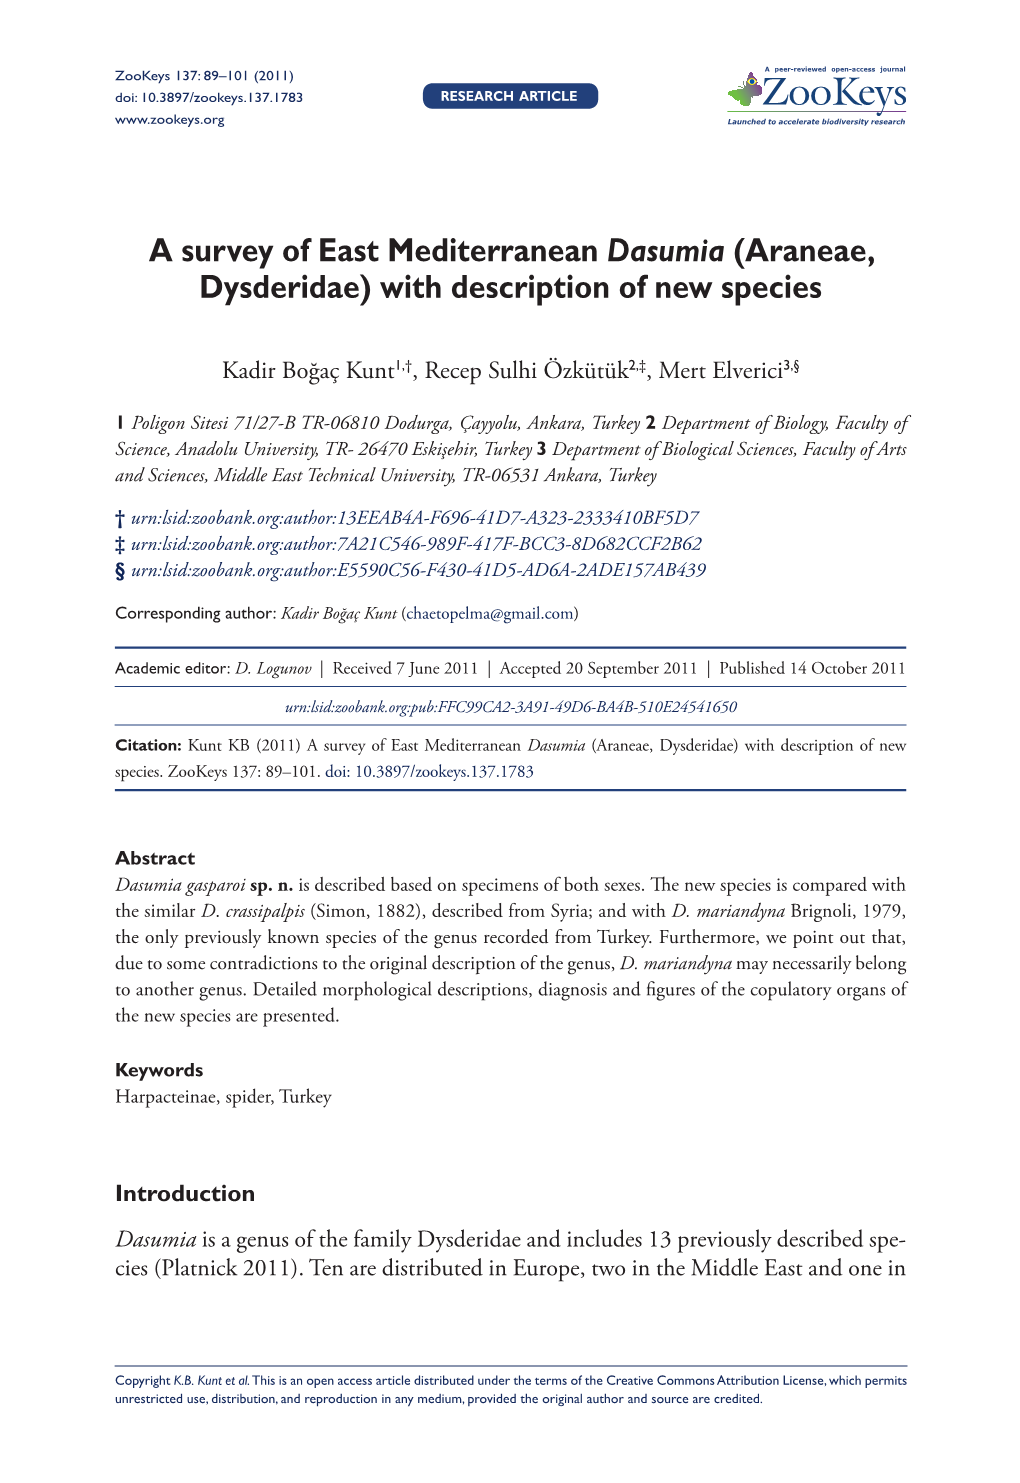 A Survey of East Mediterranean Dasumia (Araneae, Dysderidae) with Description of New Species